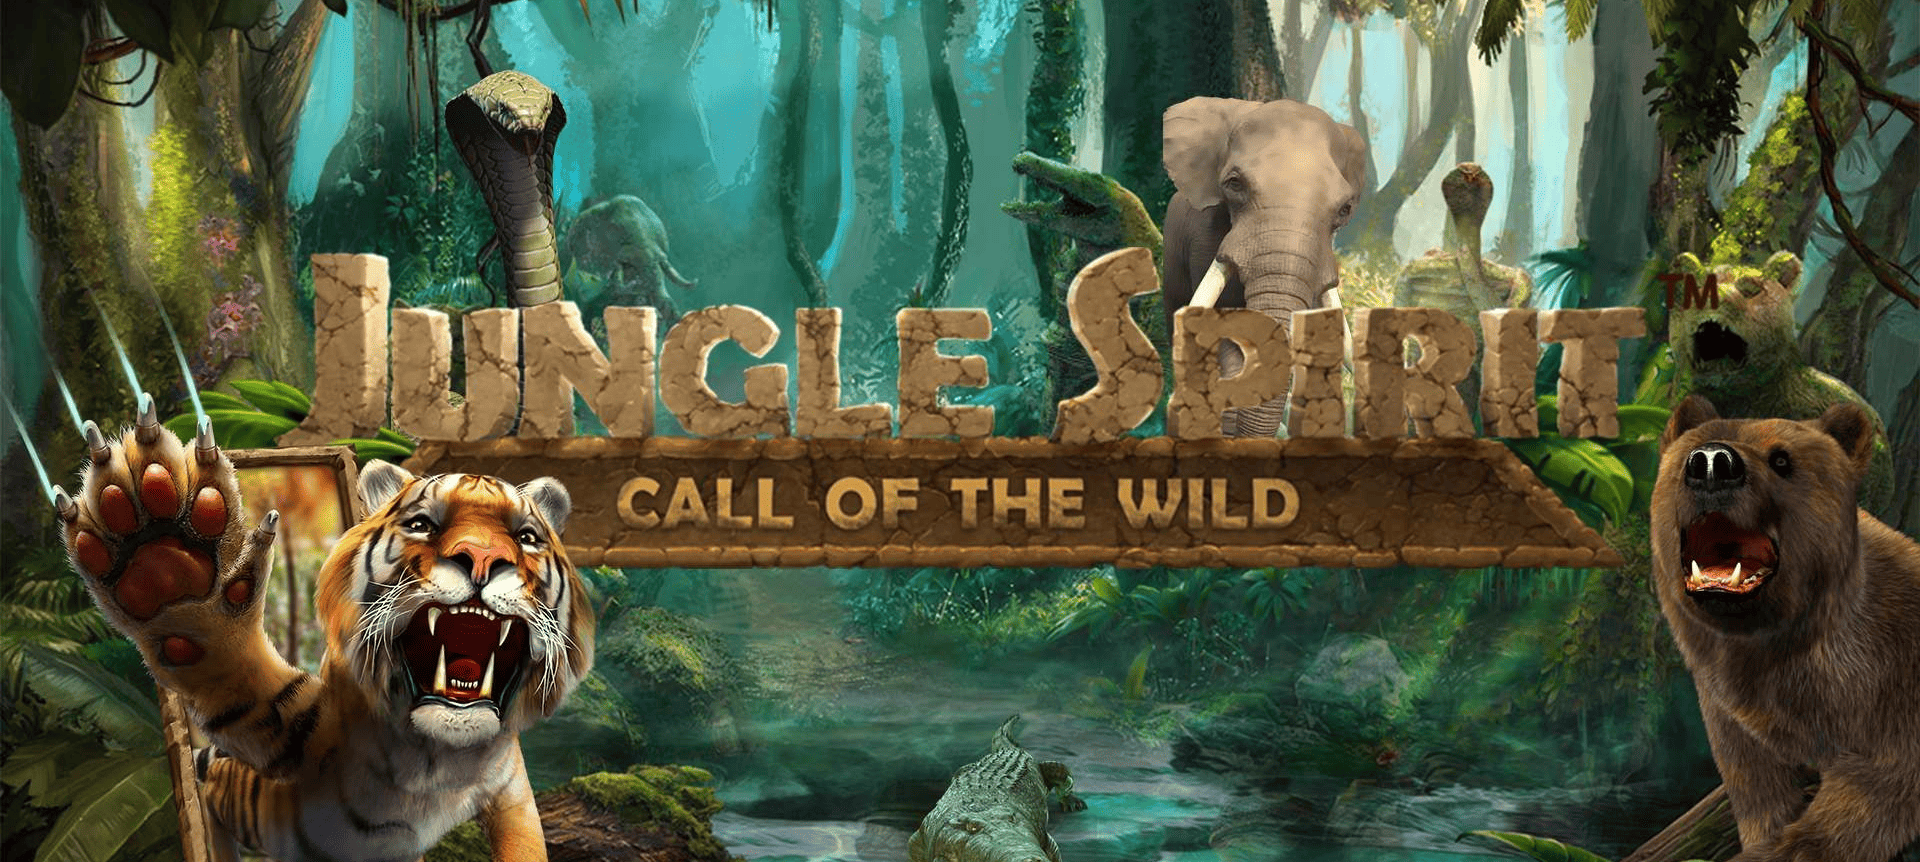 Spirit Jungle slot cover image